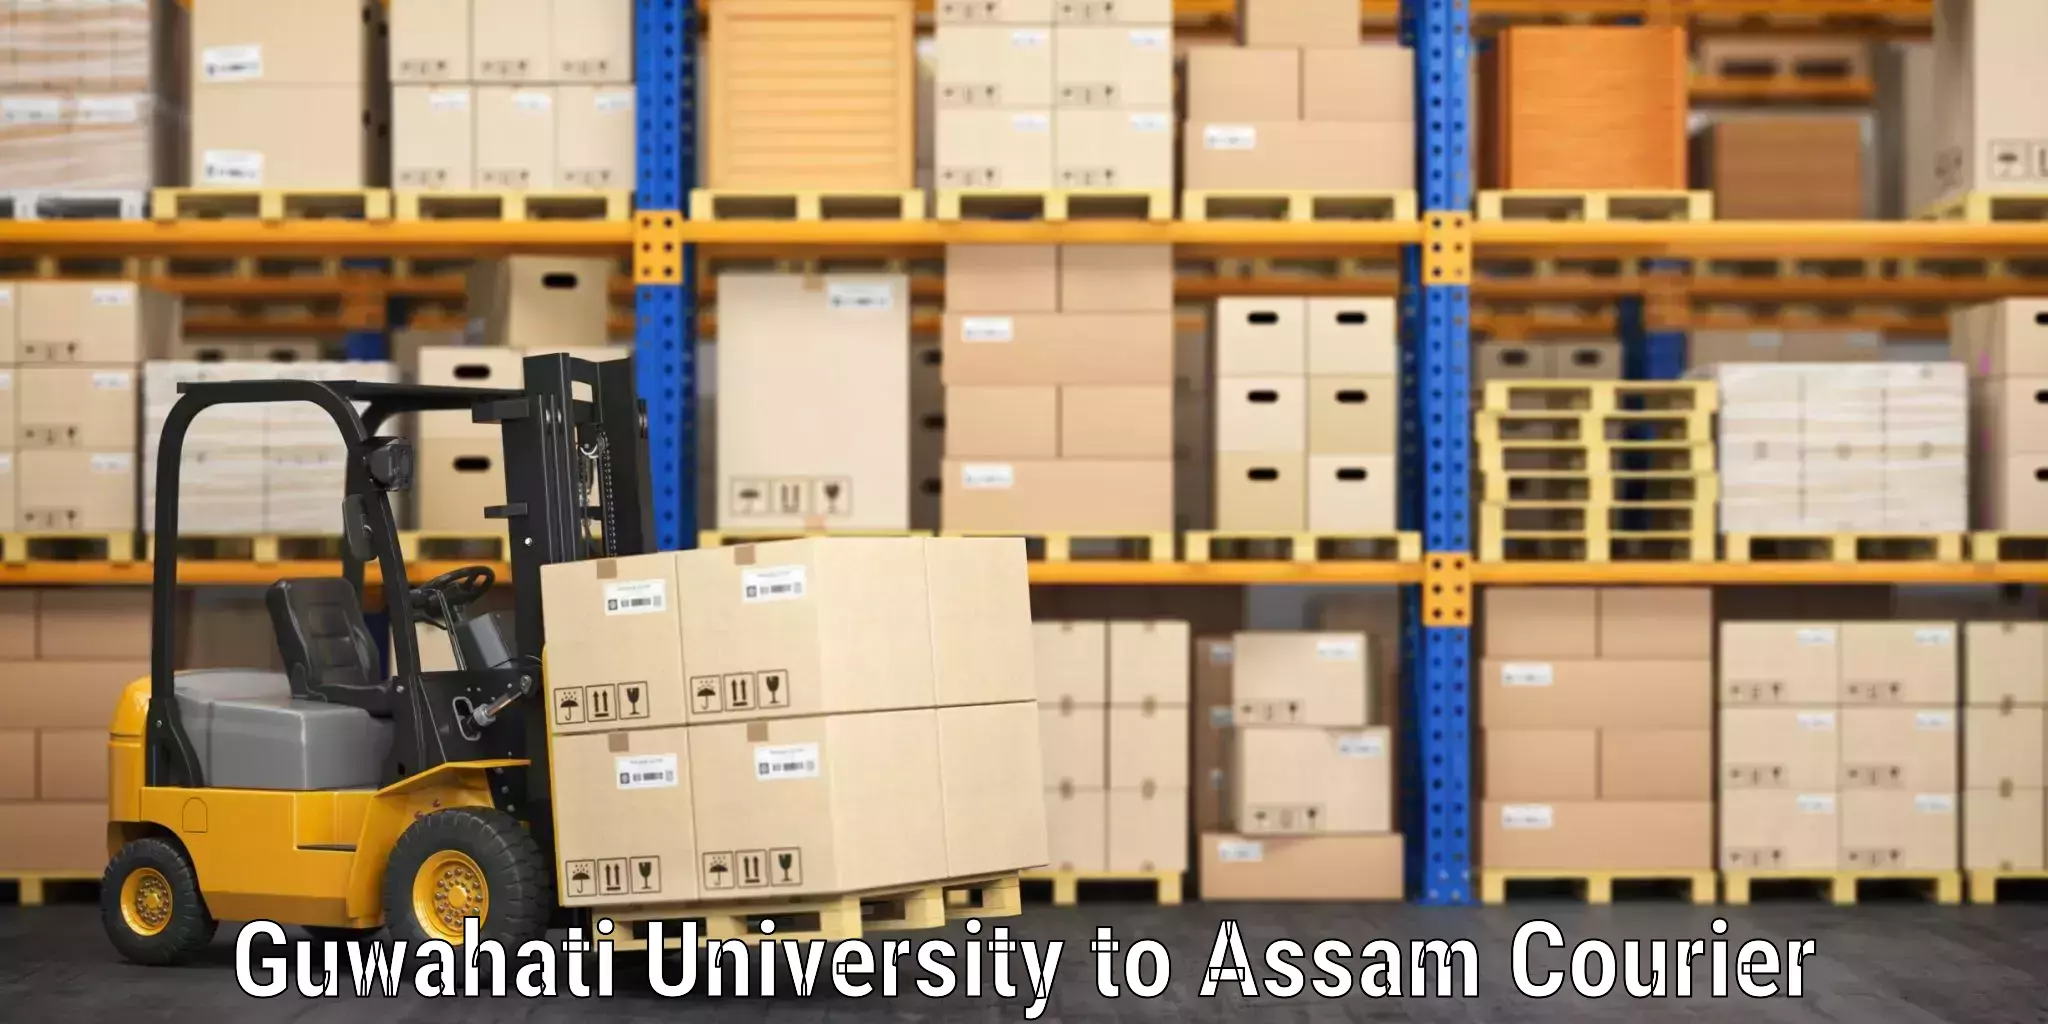 Same day luggage service Guwahati University to Assam